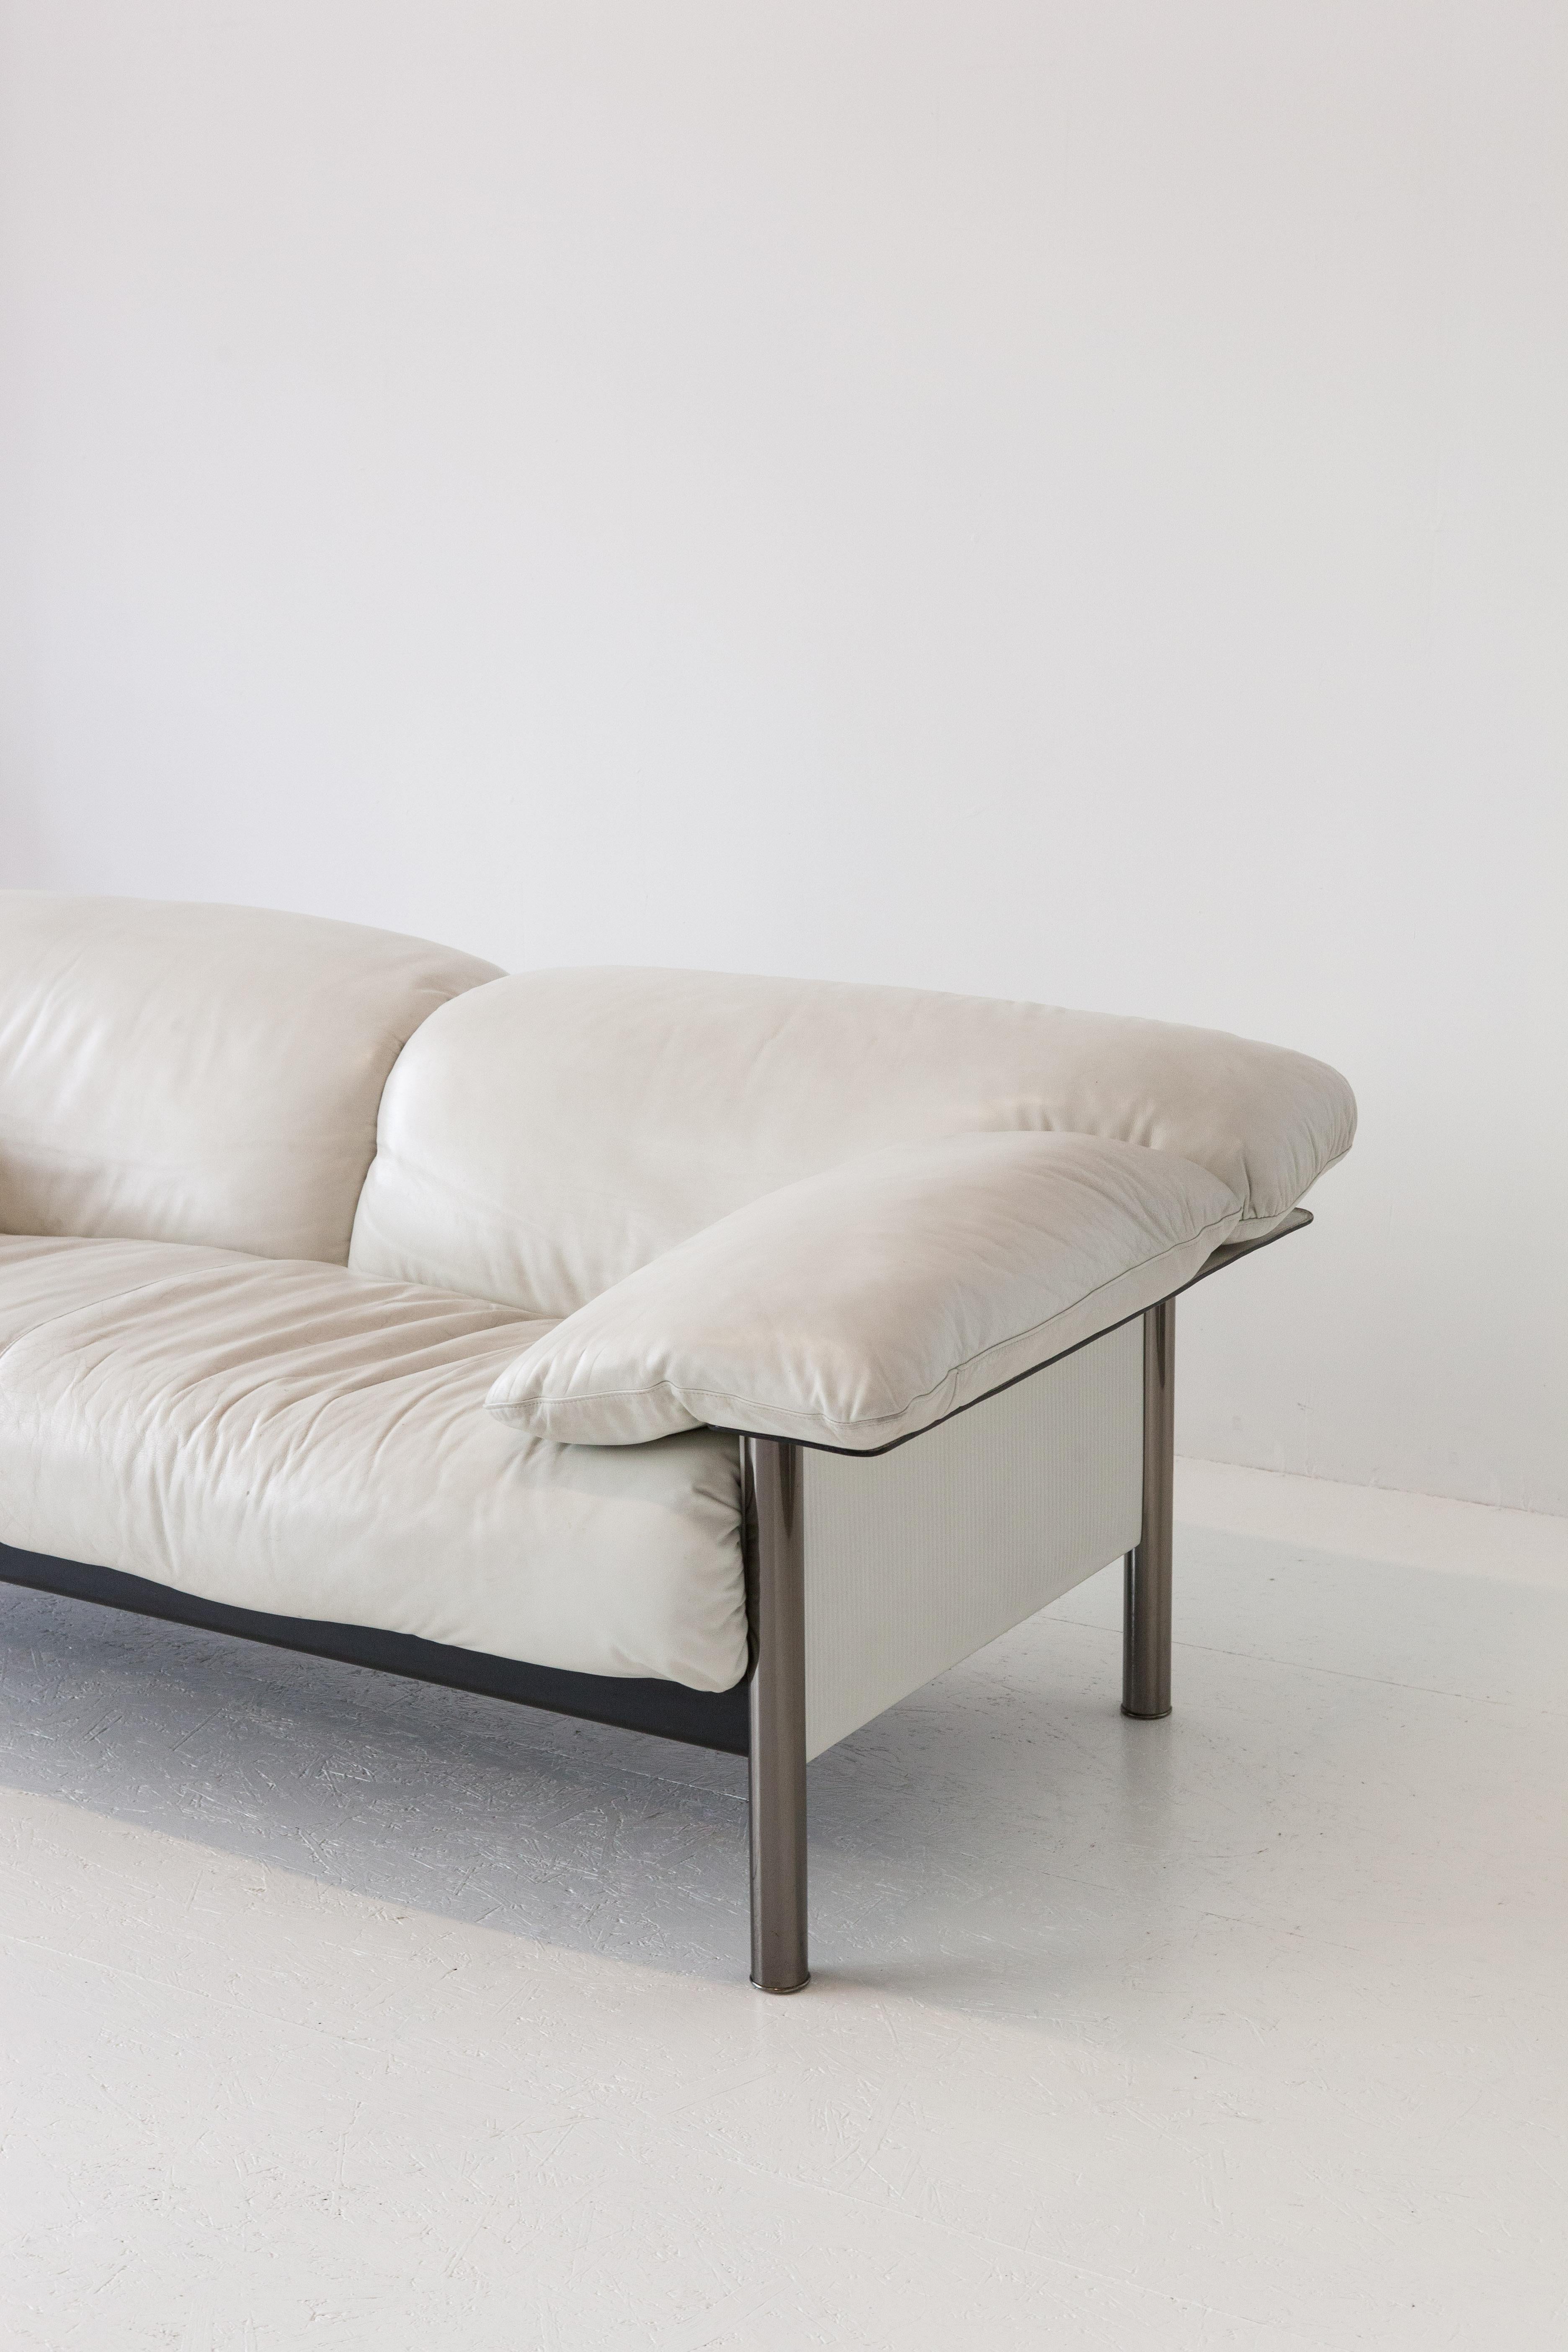 Post-Modern Pausa sofa by Pierluigi Cerri for Poltrona Frau, 1986 For Sale